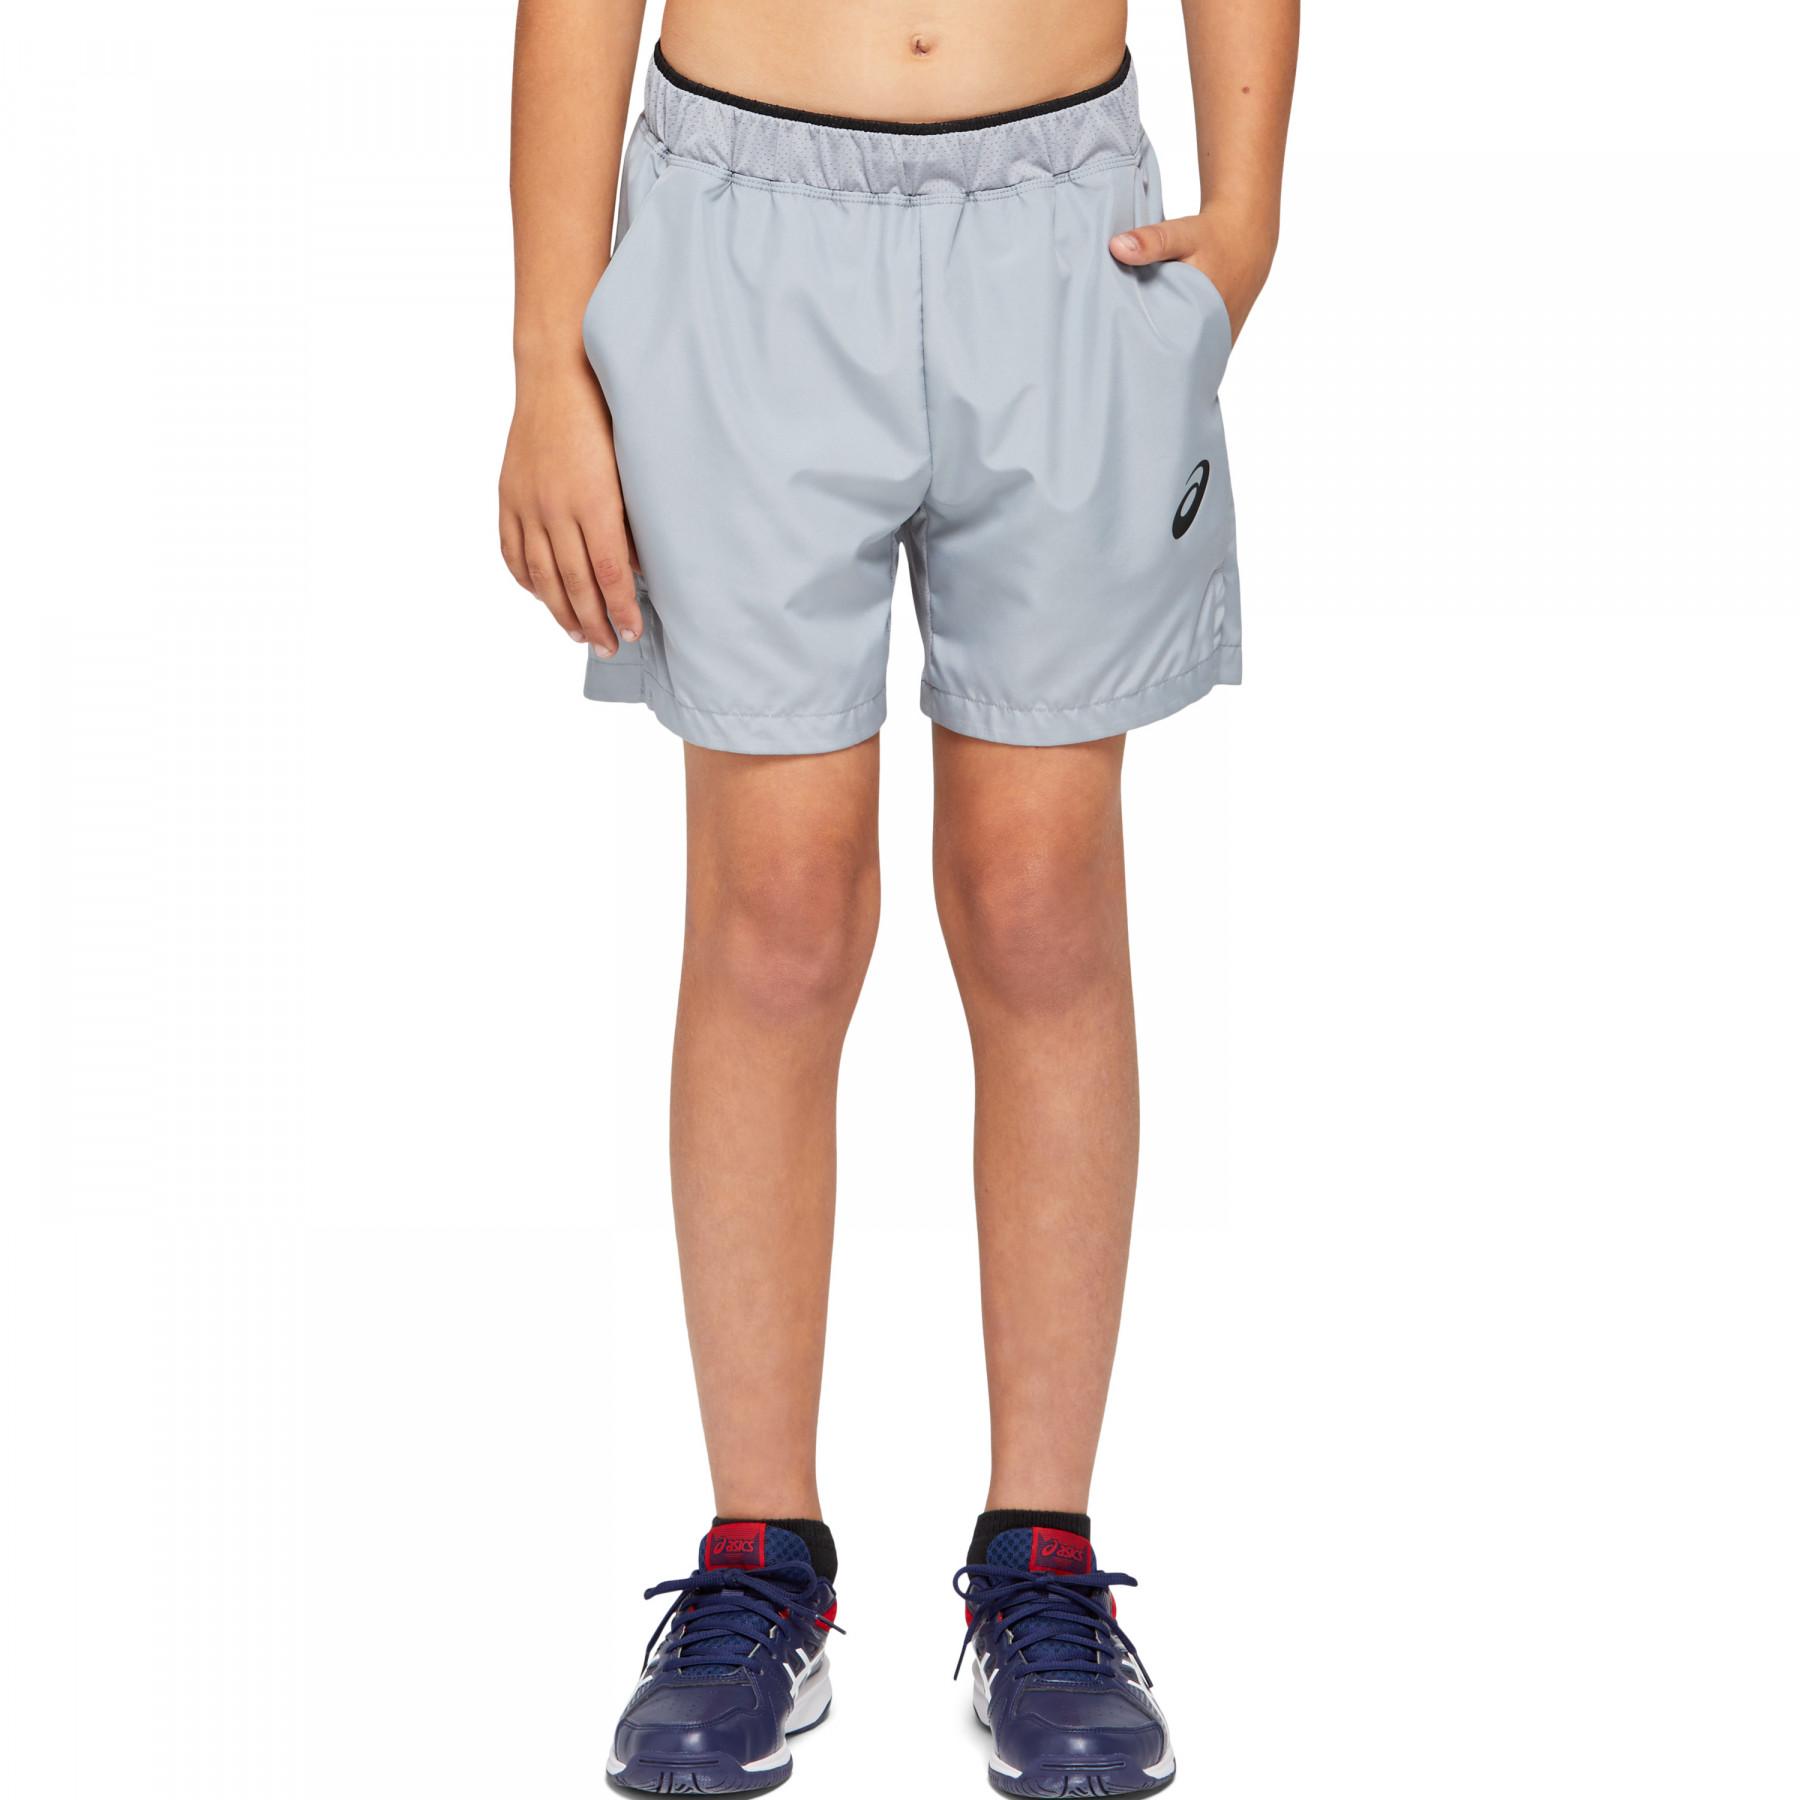 Children's shorts Asics Tennis